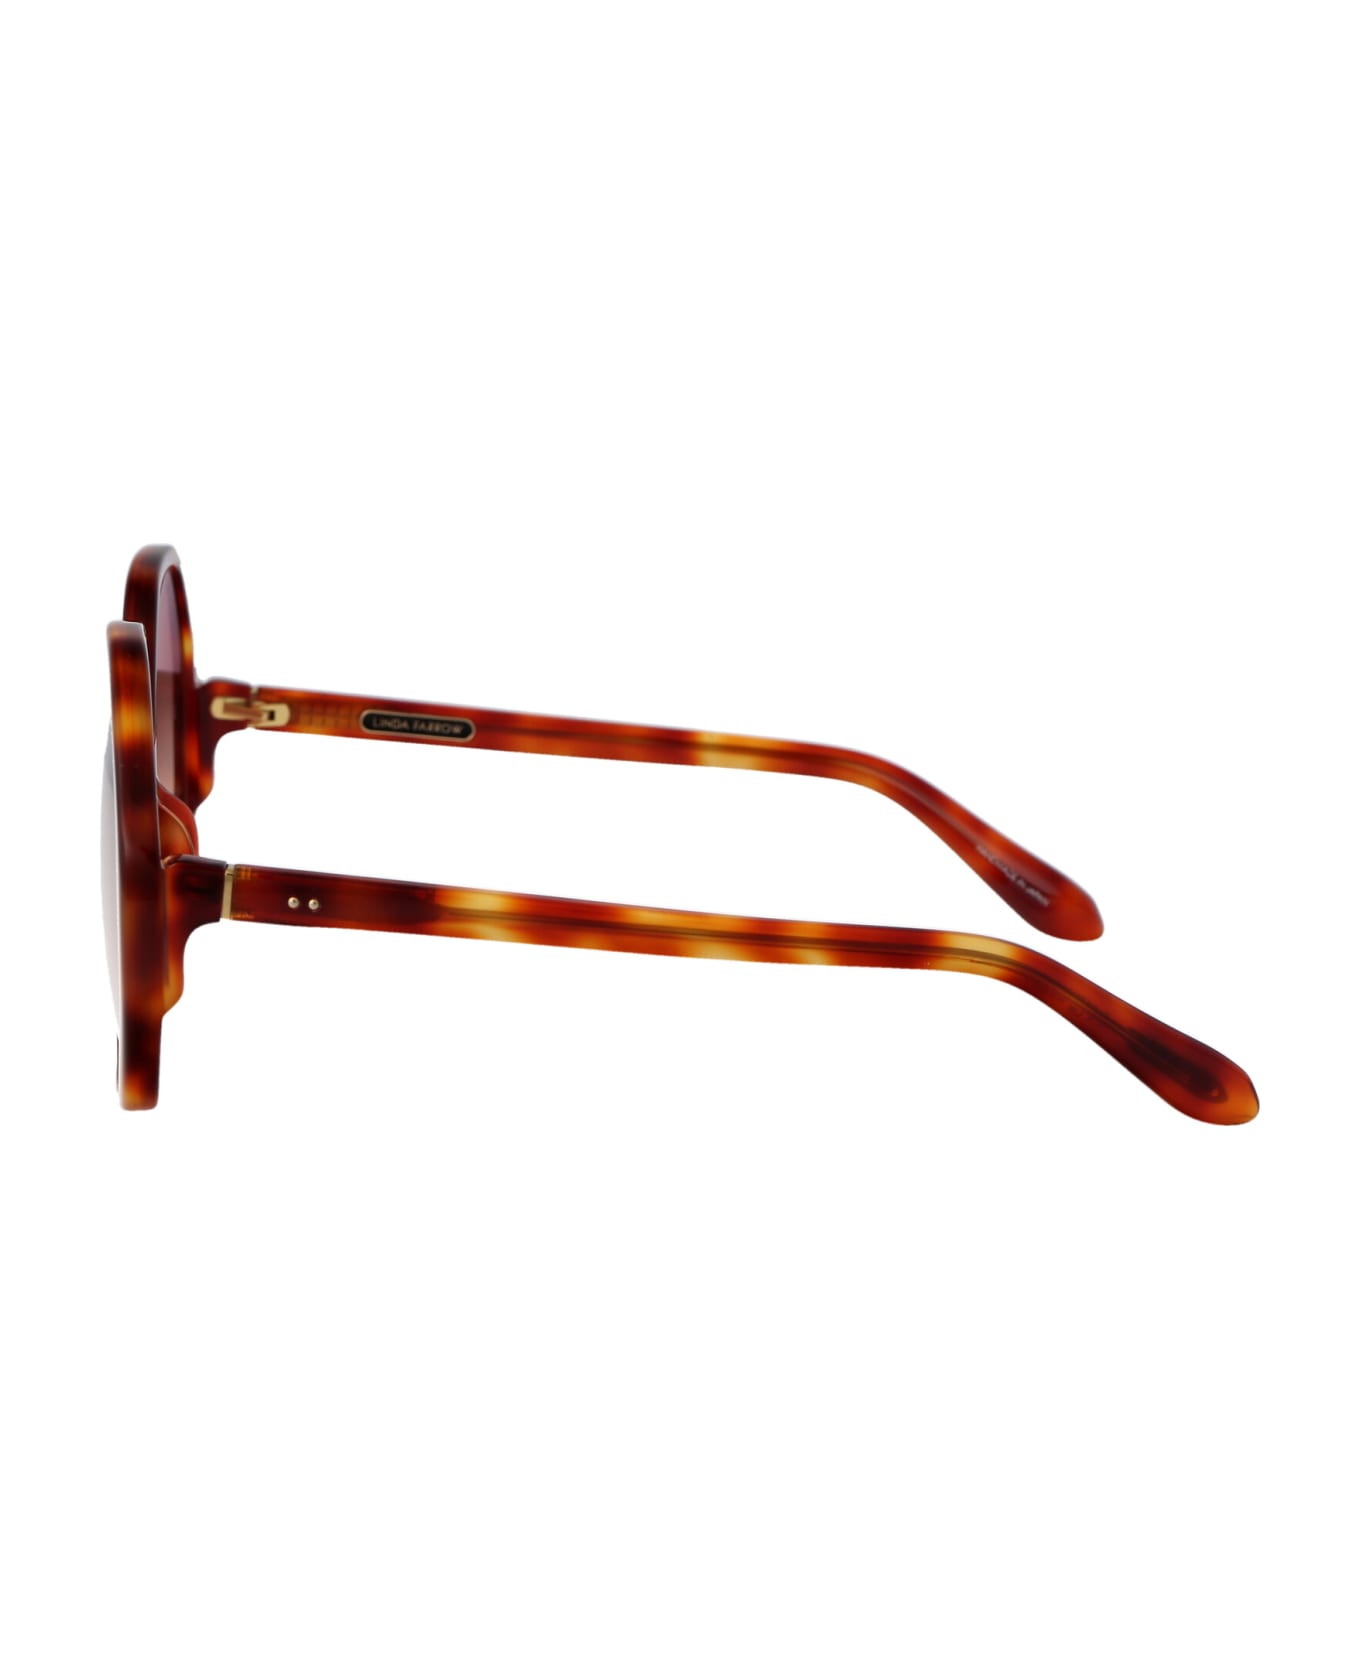 Linda Farrow Paloma Sunglasses - 03 AMBER AMBER T-SHELL OPTICAL サングラス